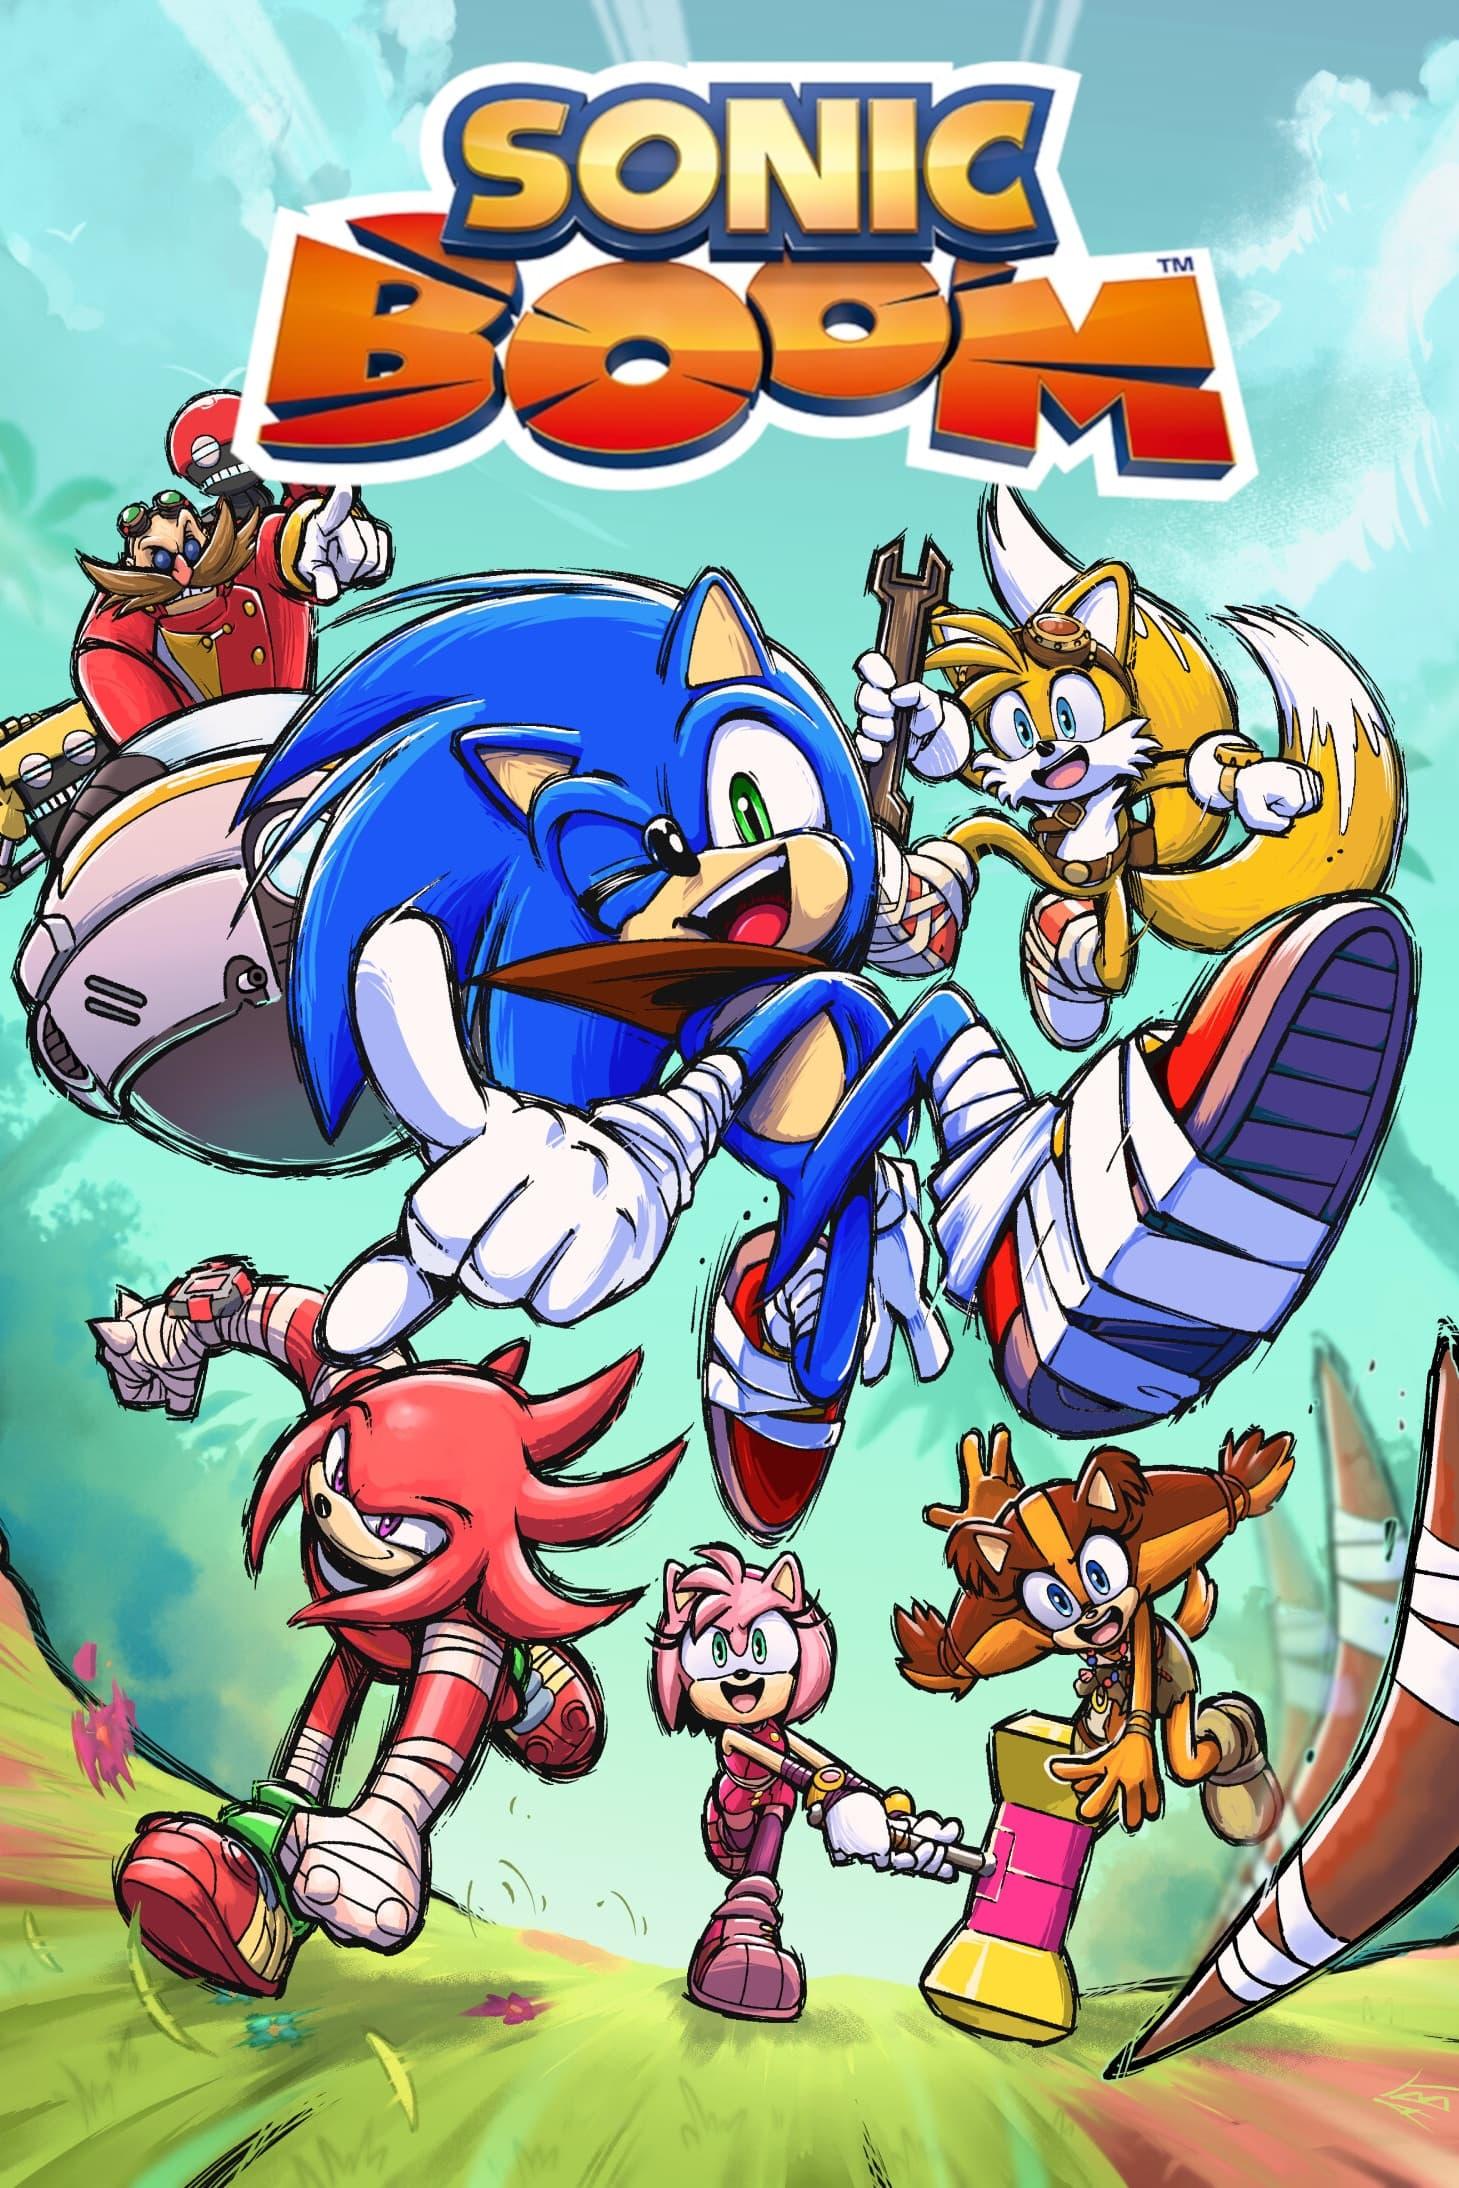 Sonic Boom poster